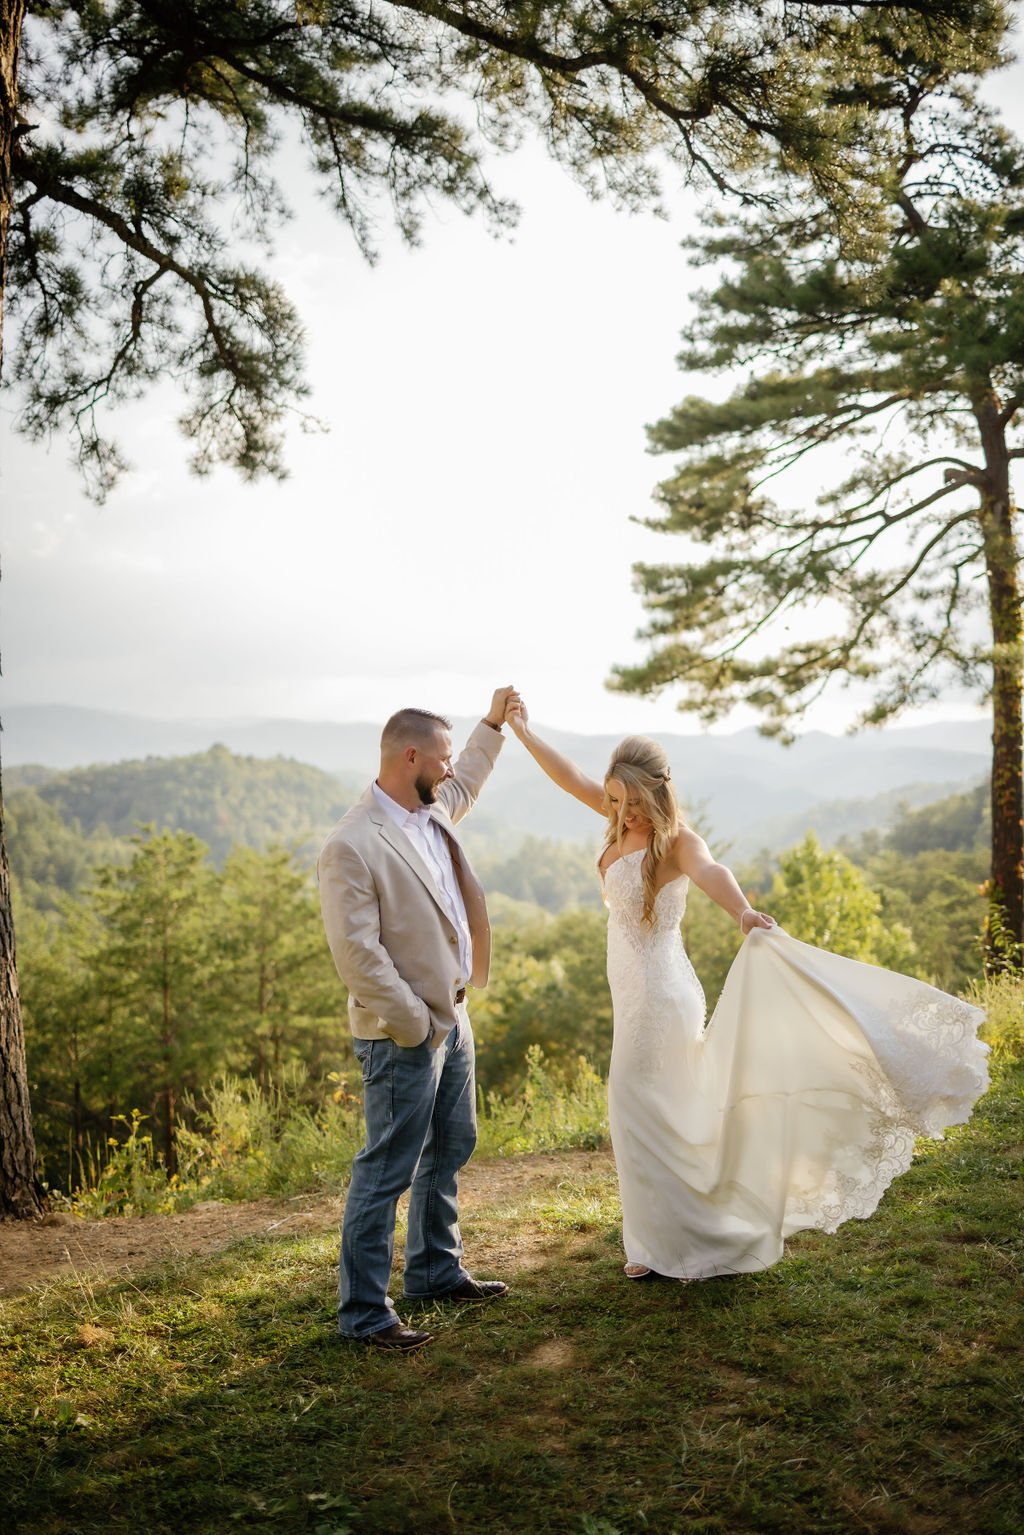 gatlinburg-wedding-photographer-if-uncles-brings-a-camera-to-a-gatlinburg-wedding-outdoor-bridals